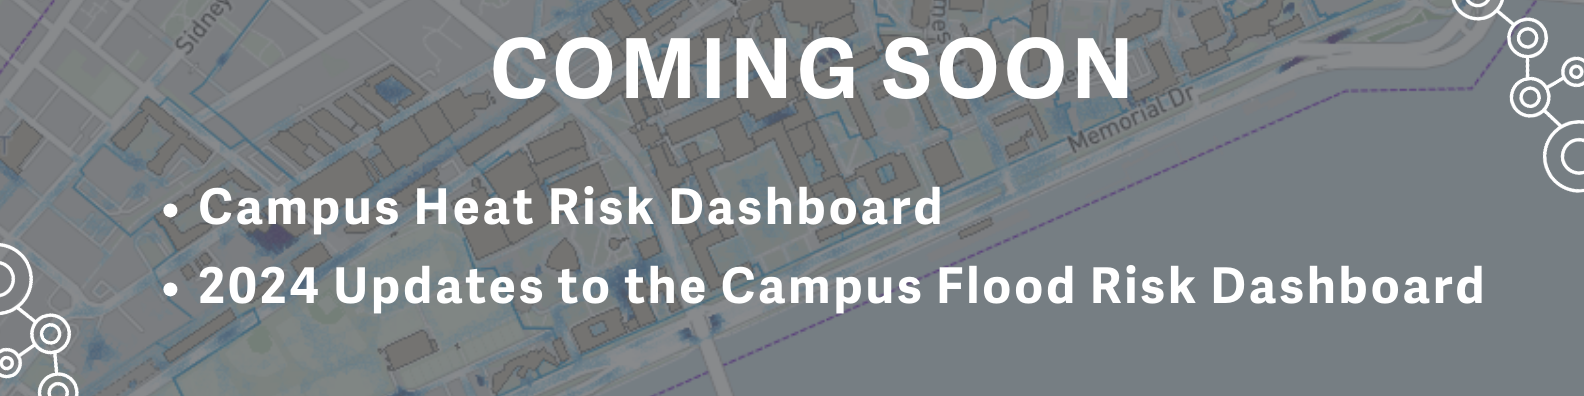 coming soon: heat risk dashboard, updated flood risk dashboard